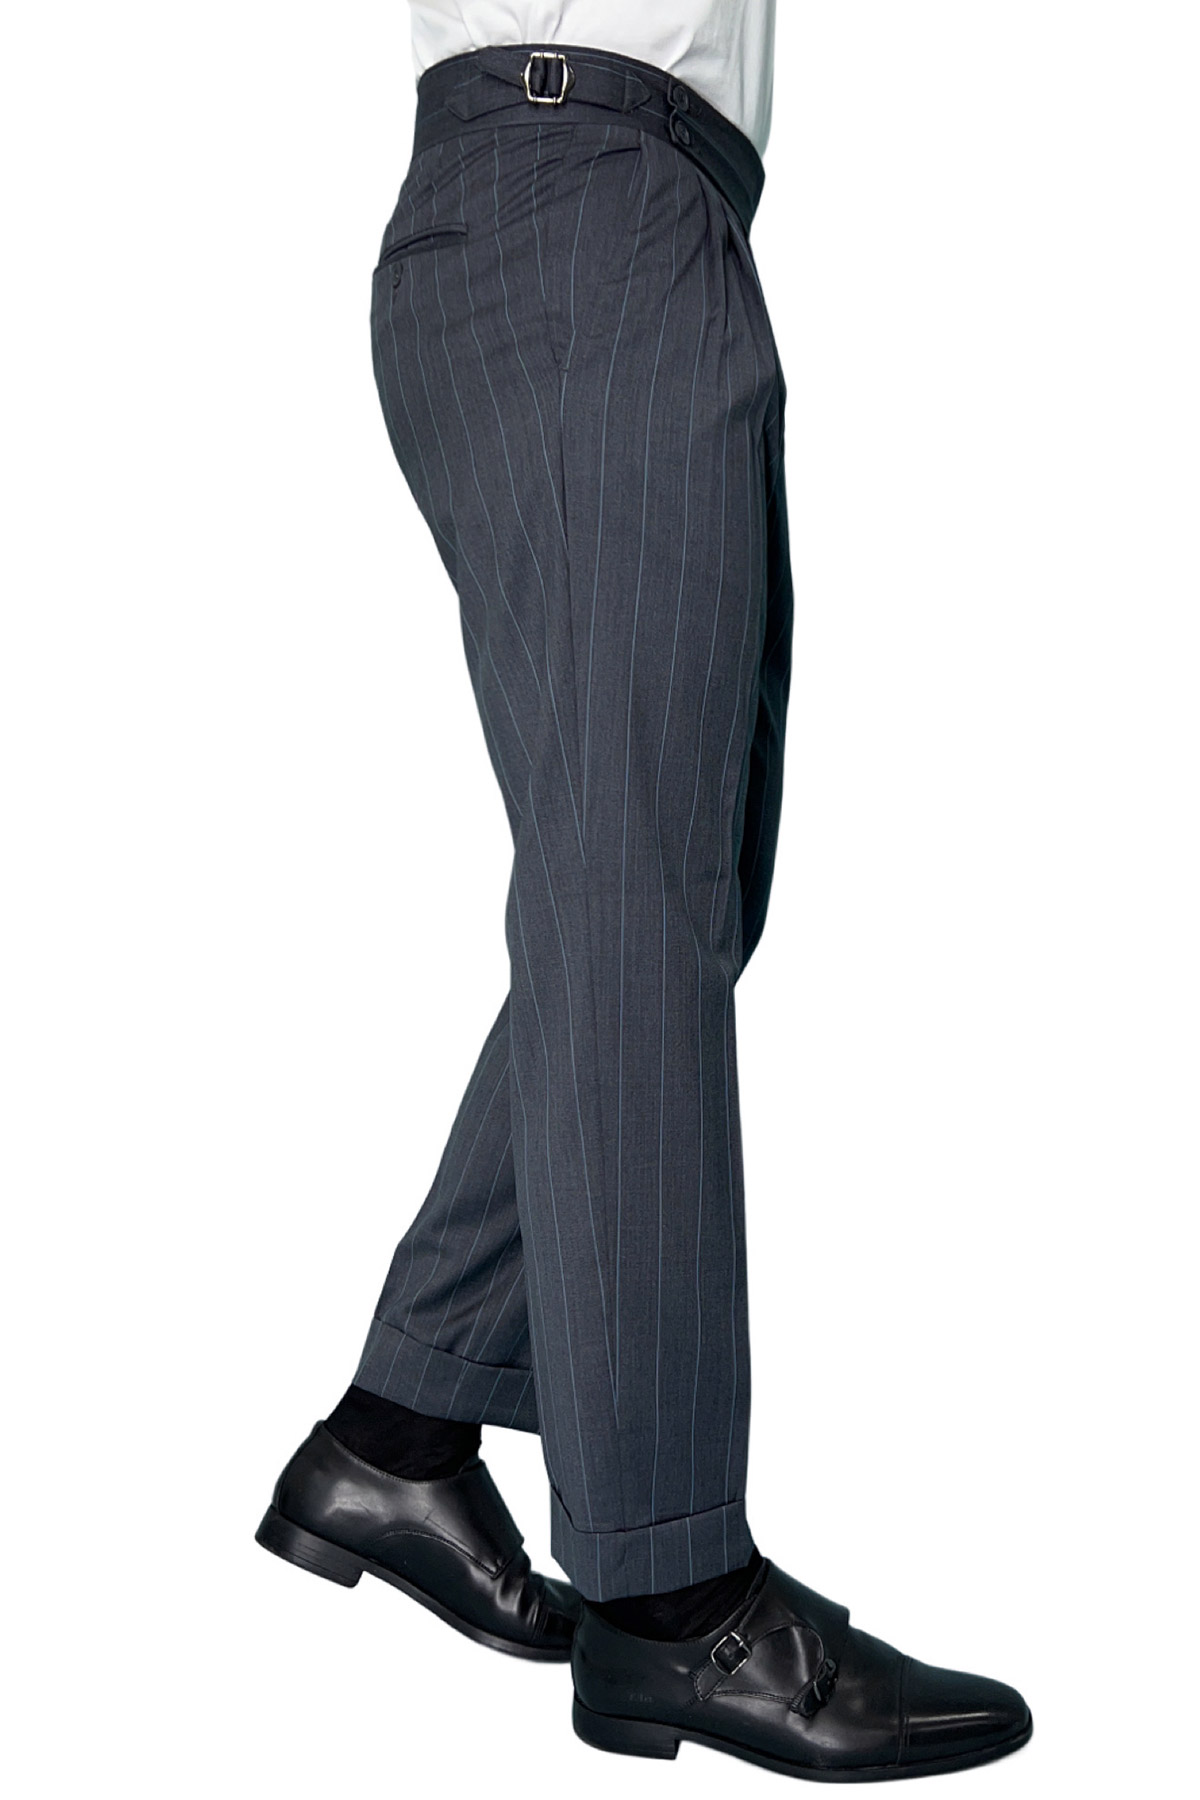 Pantalone uomo grigio gessato celeste vita alta doppia pinces in fresco lana super 130's